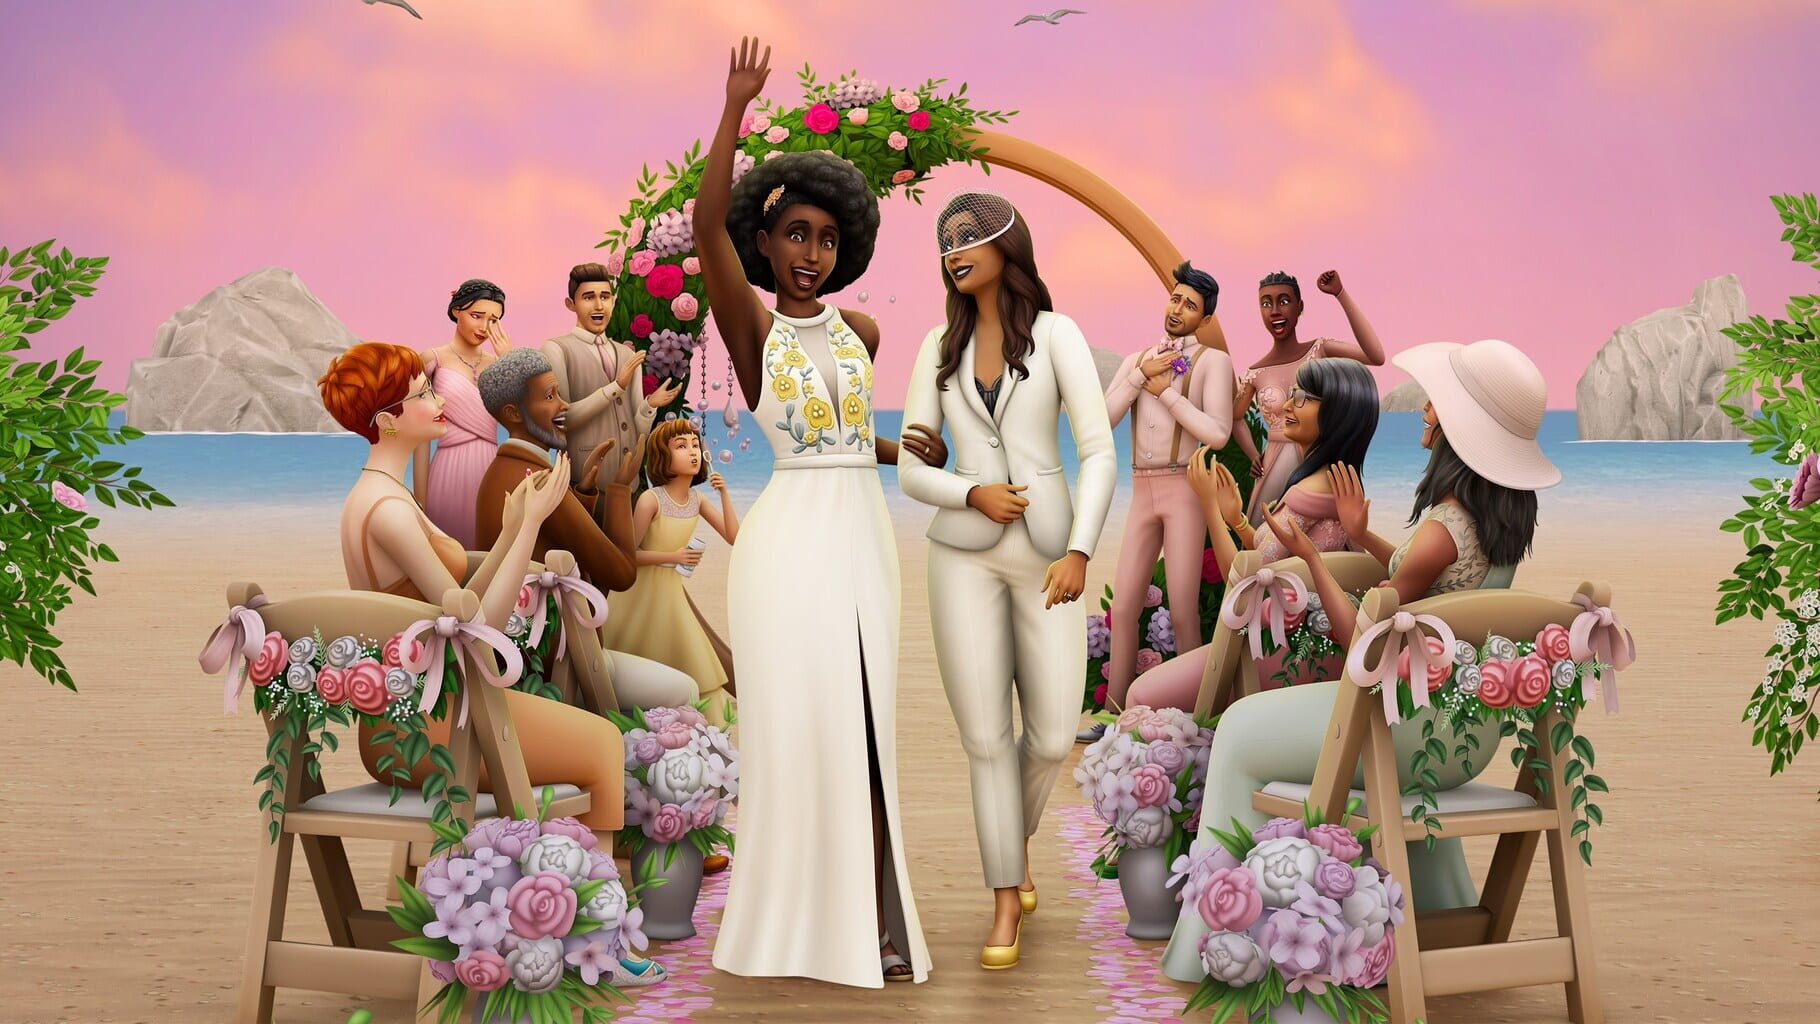 Arte - The Sims 4: My Wedding Stories